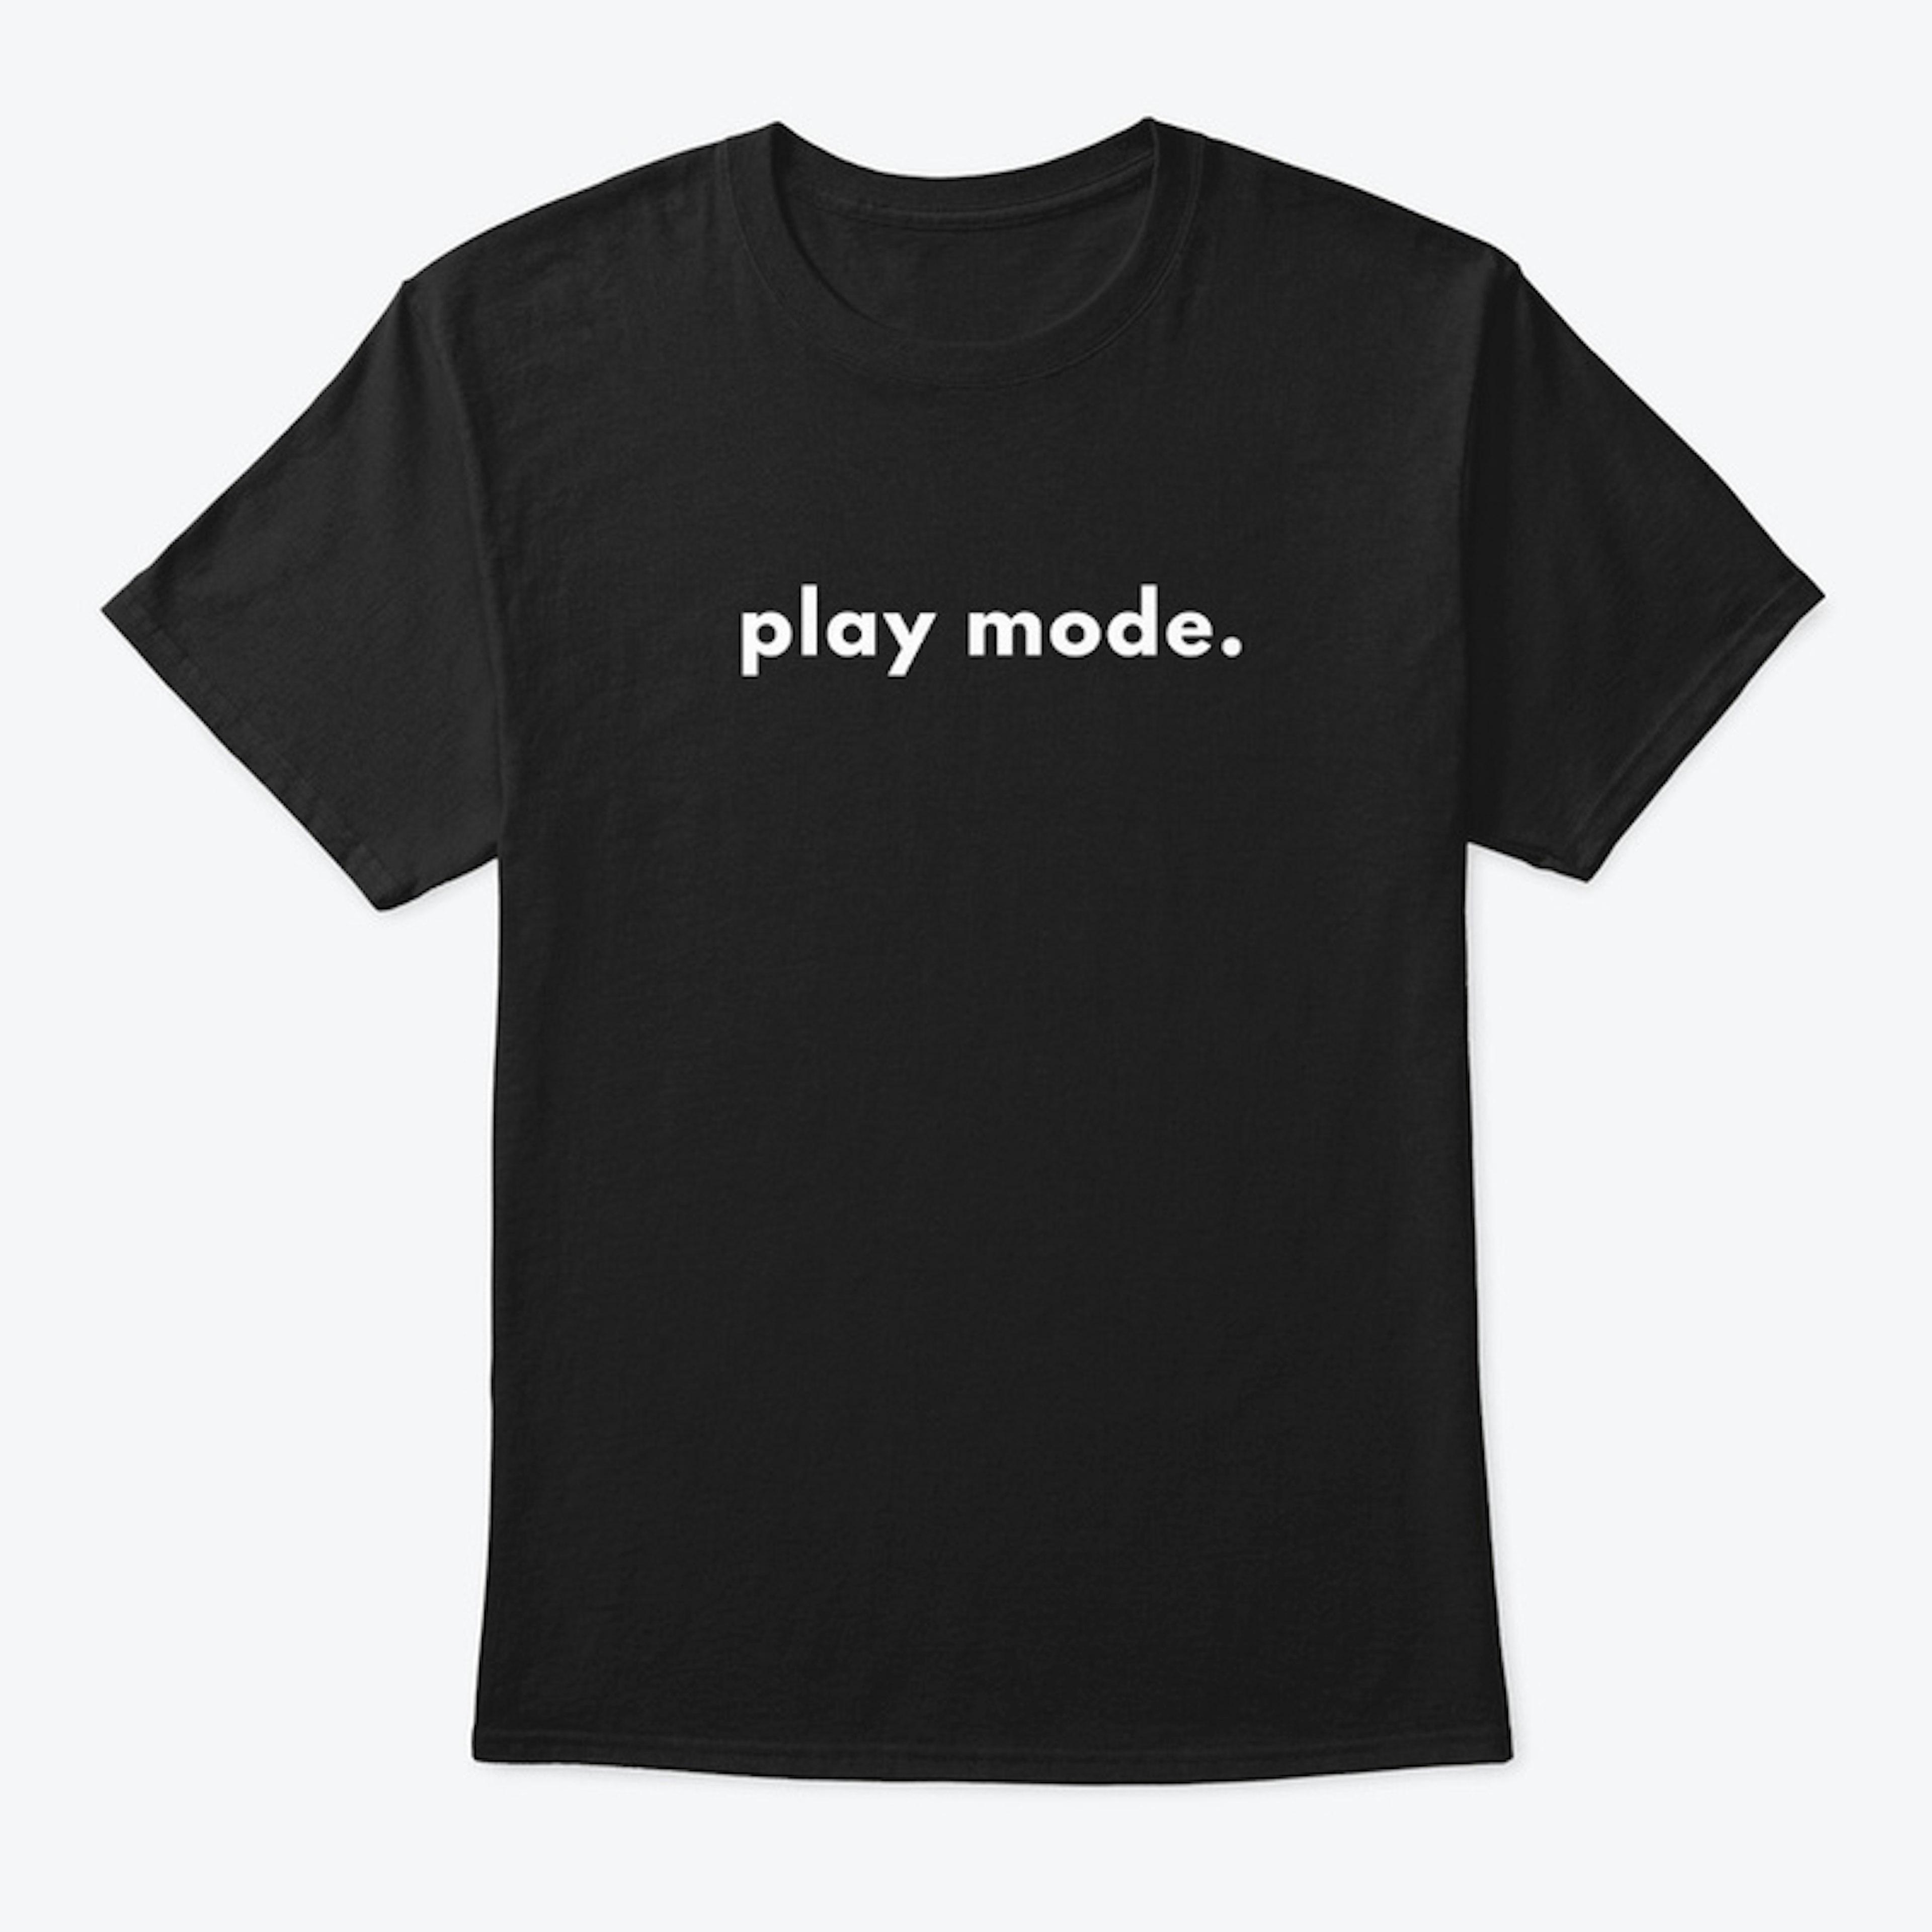 play mode